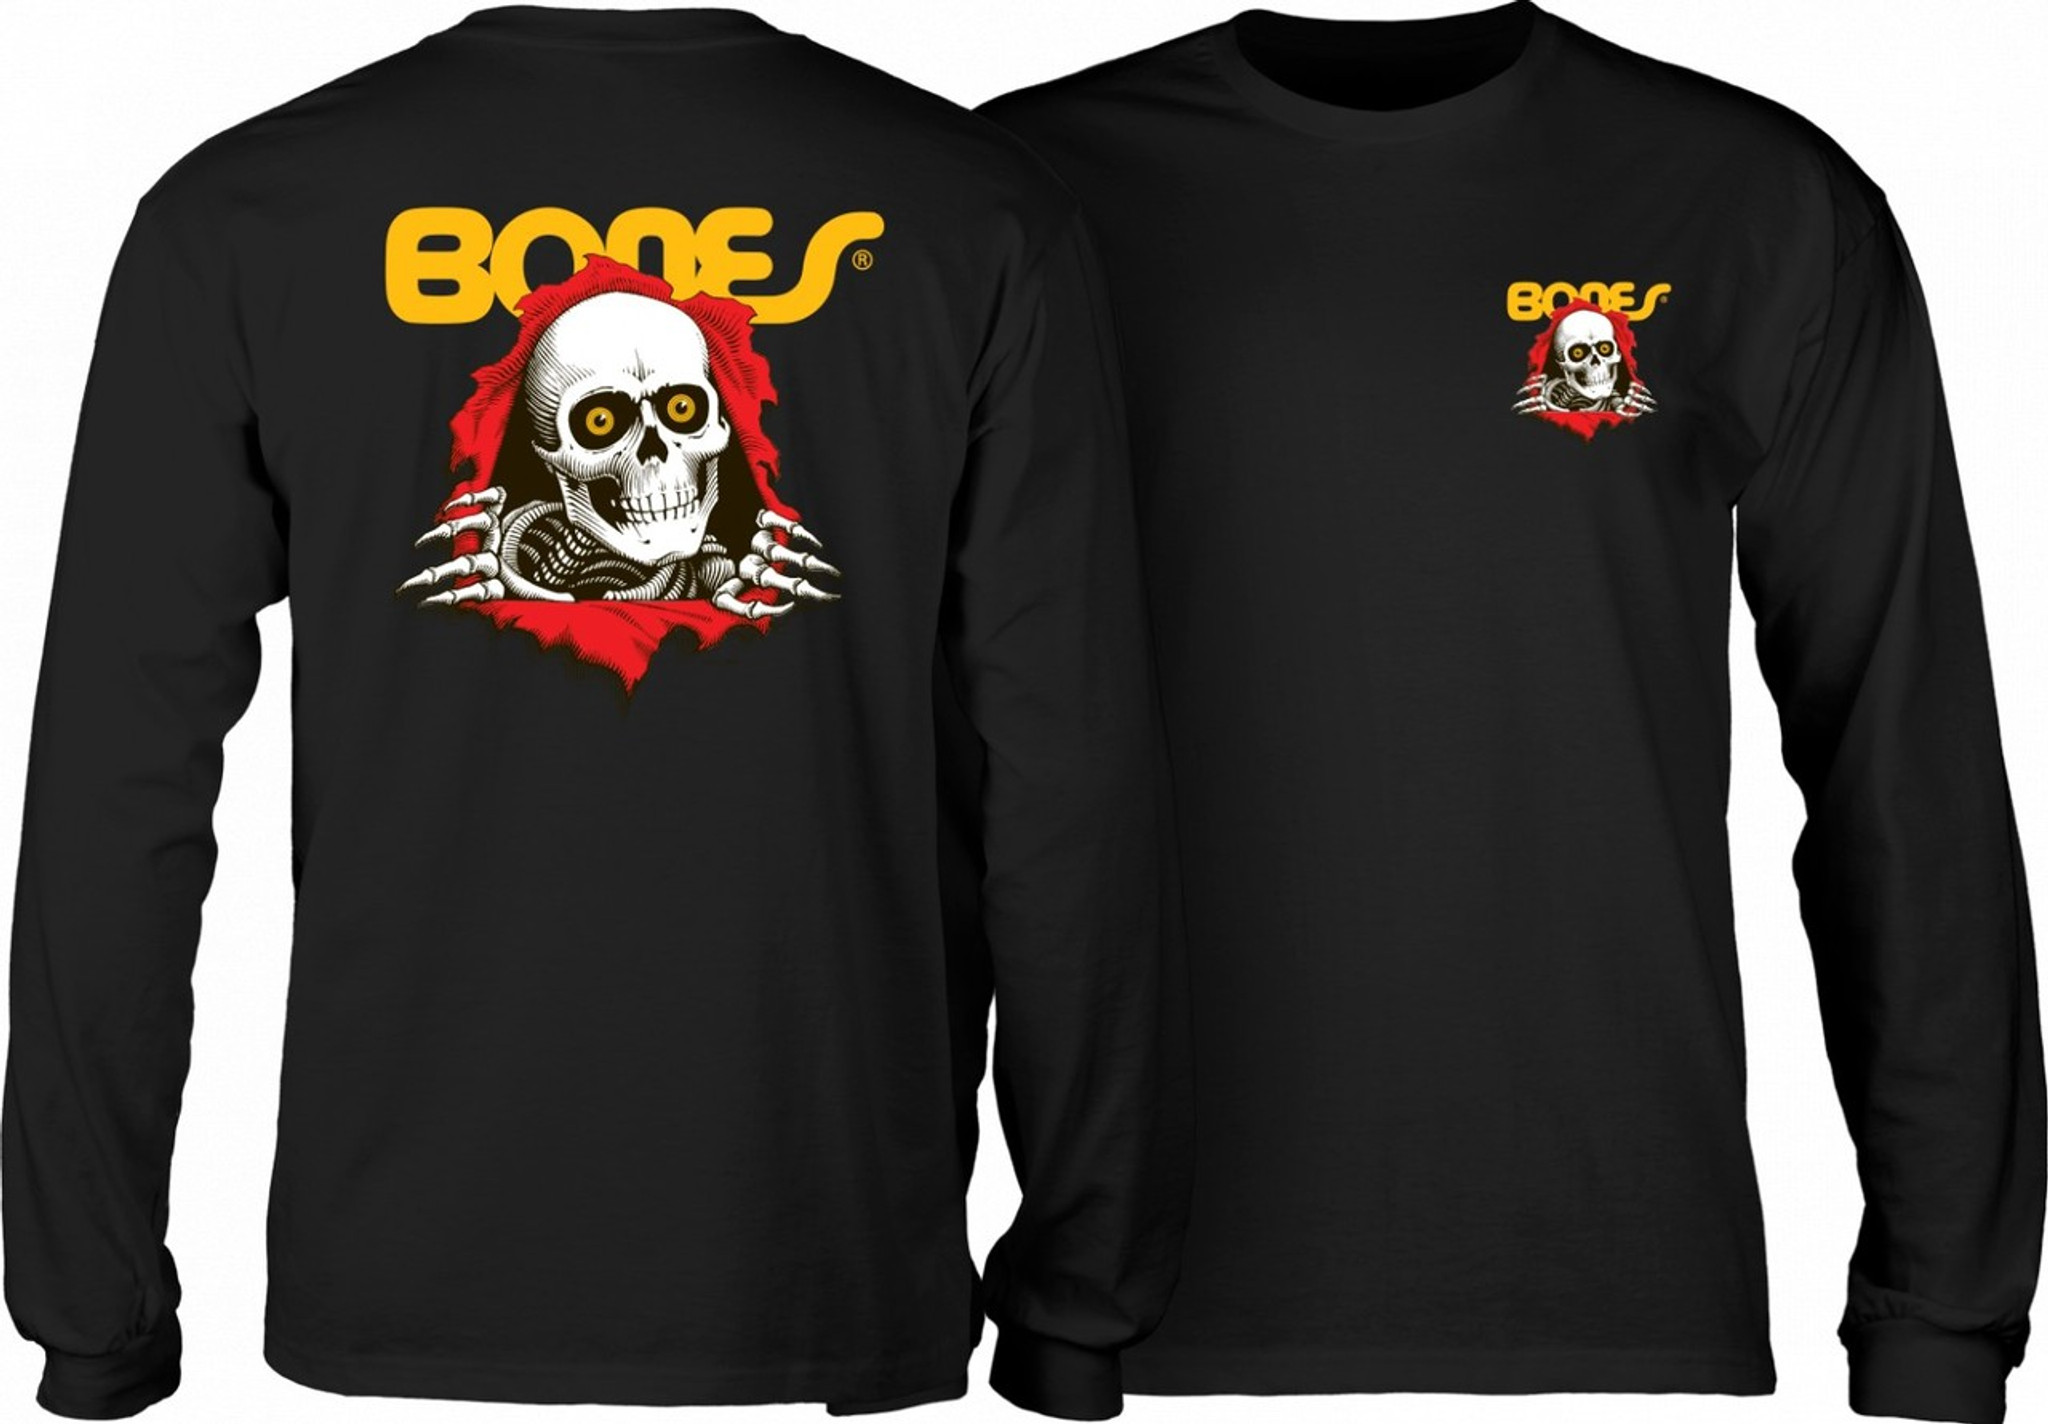 POWELL PERALTA Supreme Skateboard Long Sleeve T-Shirt BLACK S M L or XL  Bones Brigade LST